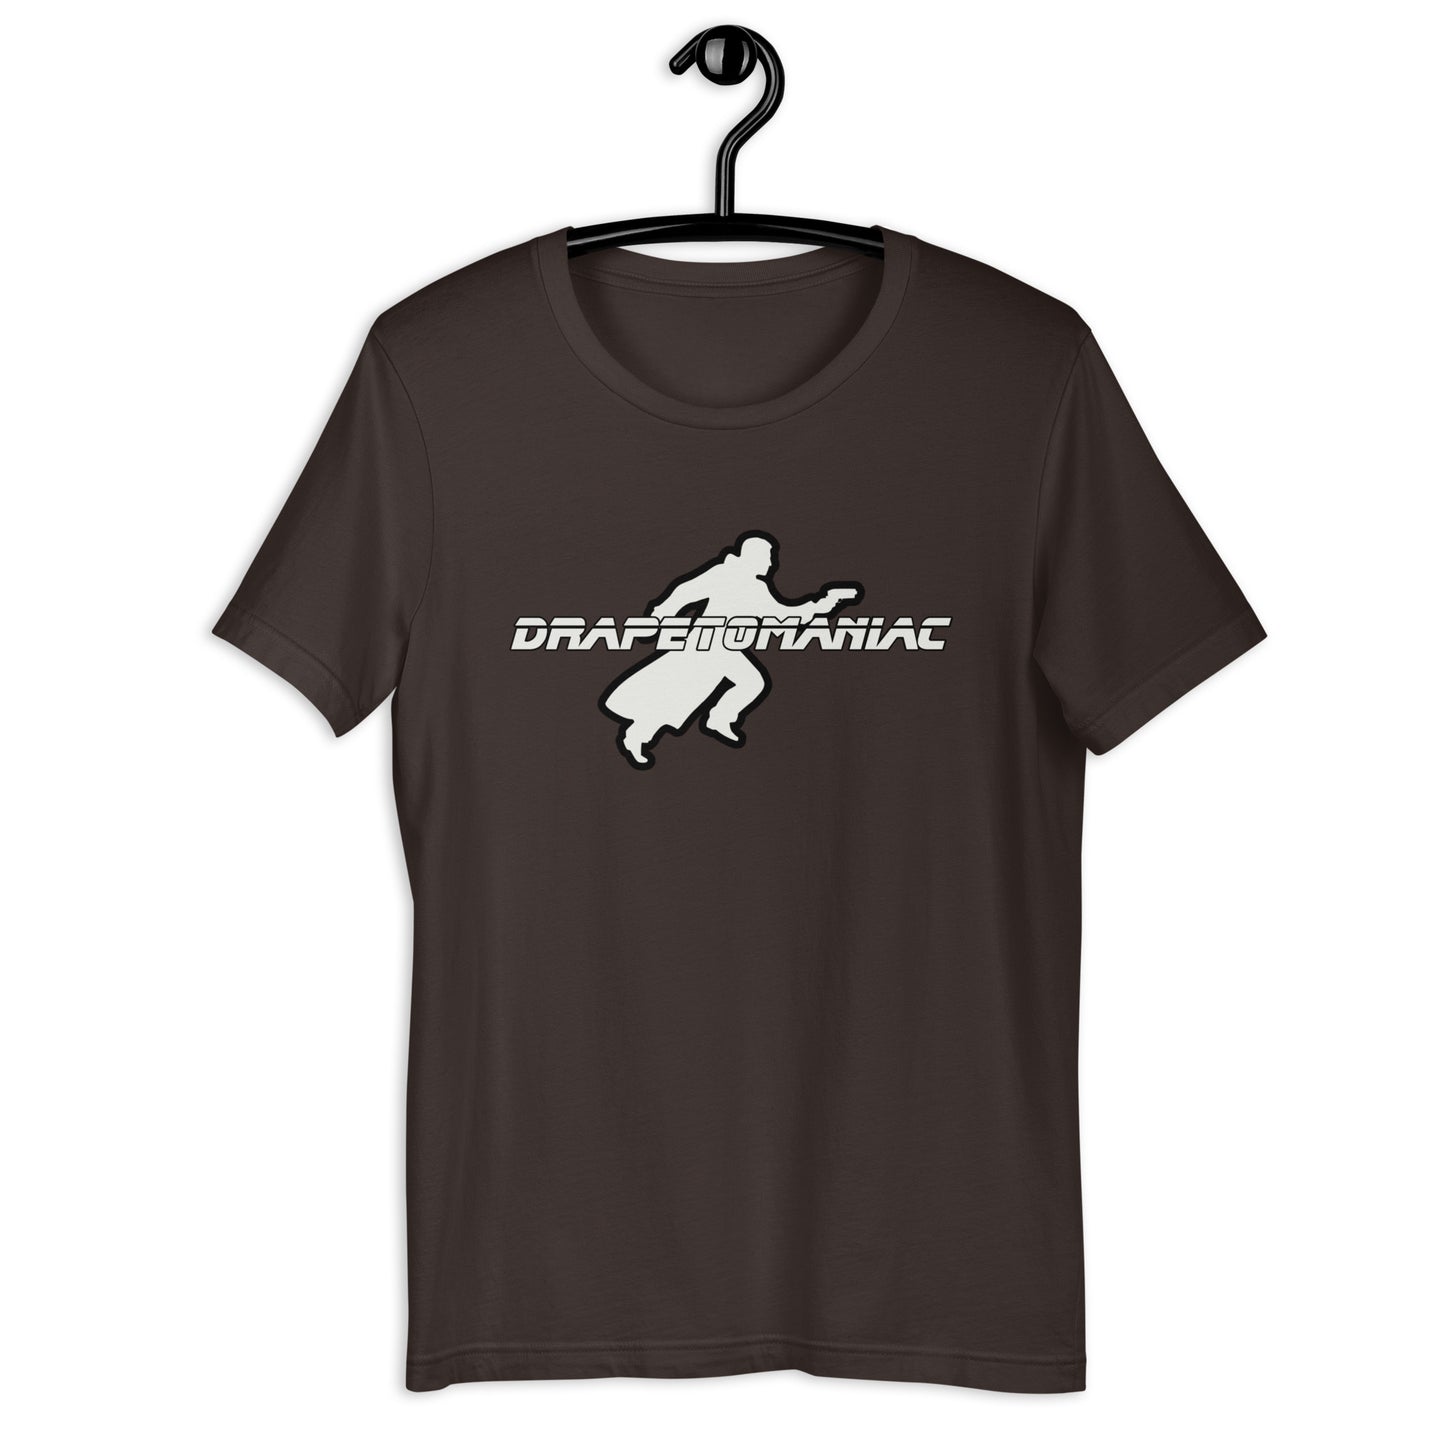 Drapetomaniac - Unisex t-shirt